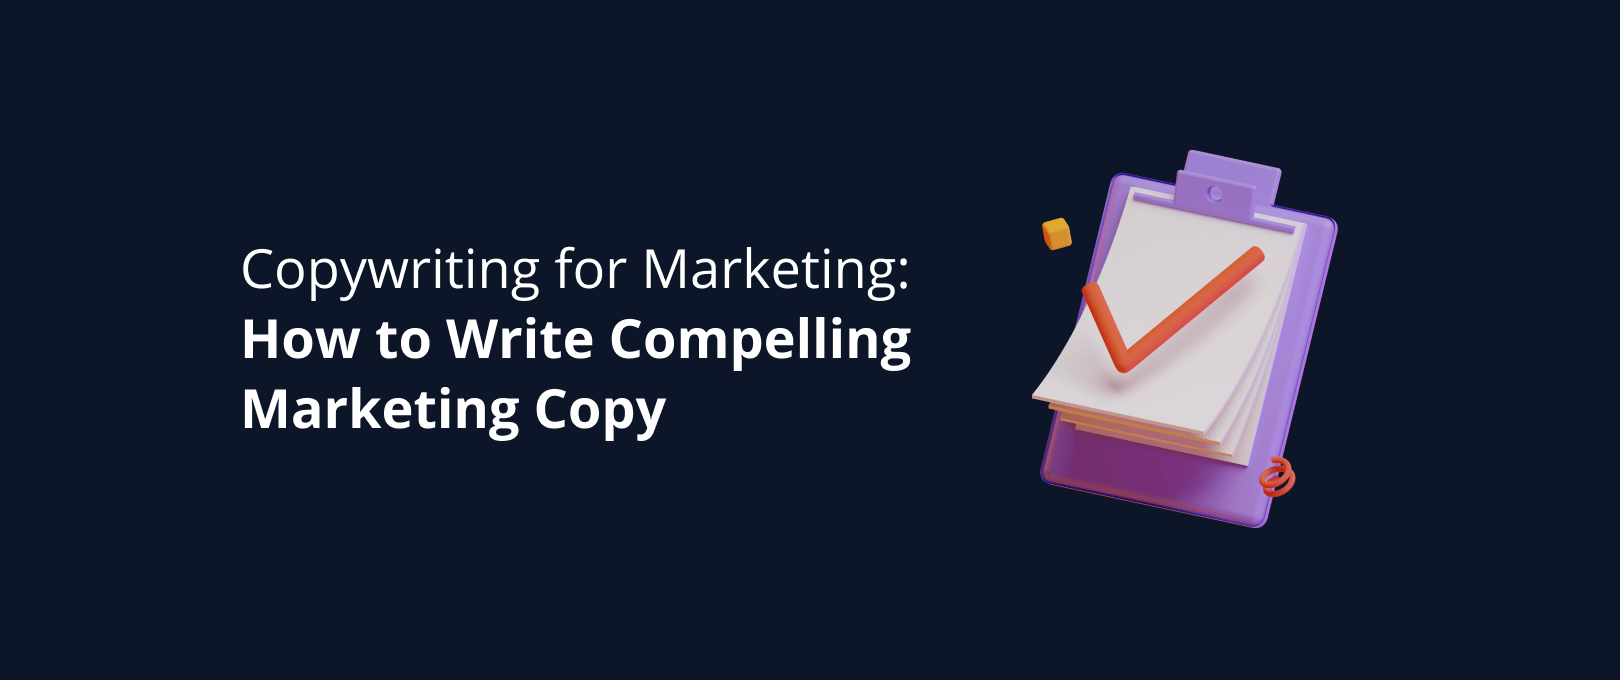 Copywriting for Marketing: How to Write Compelling Marketing Copy